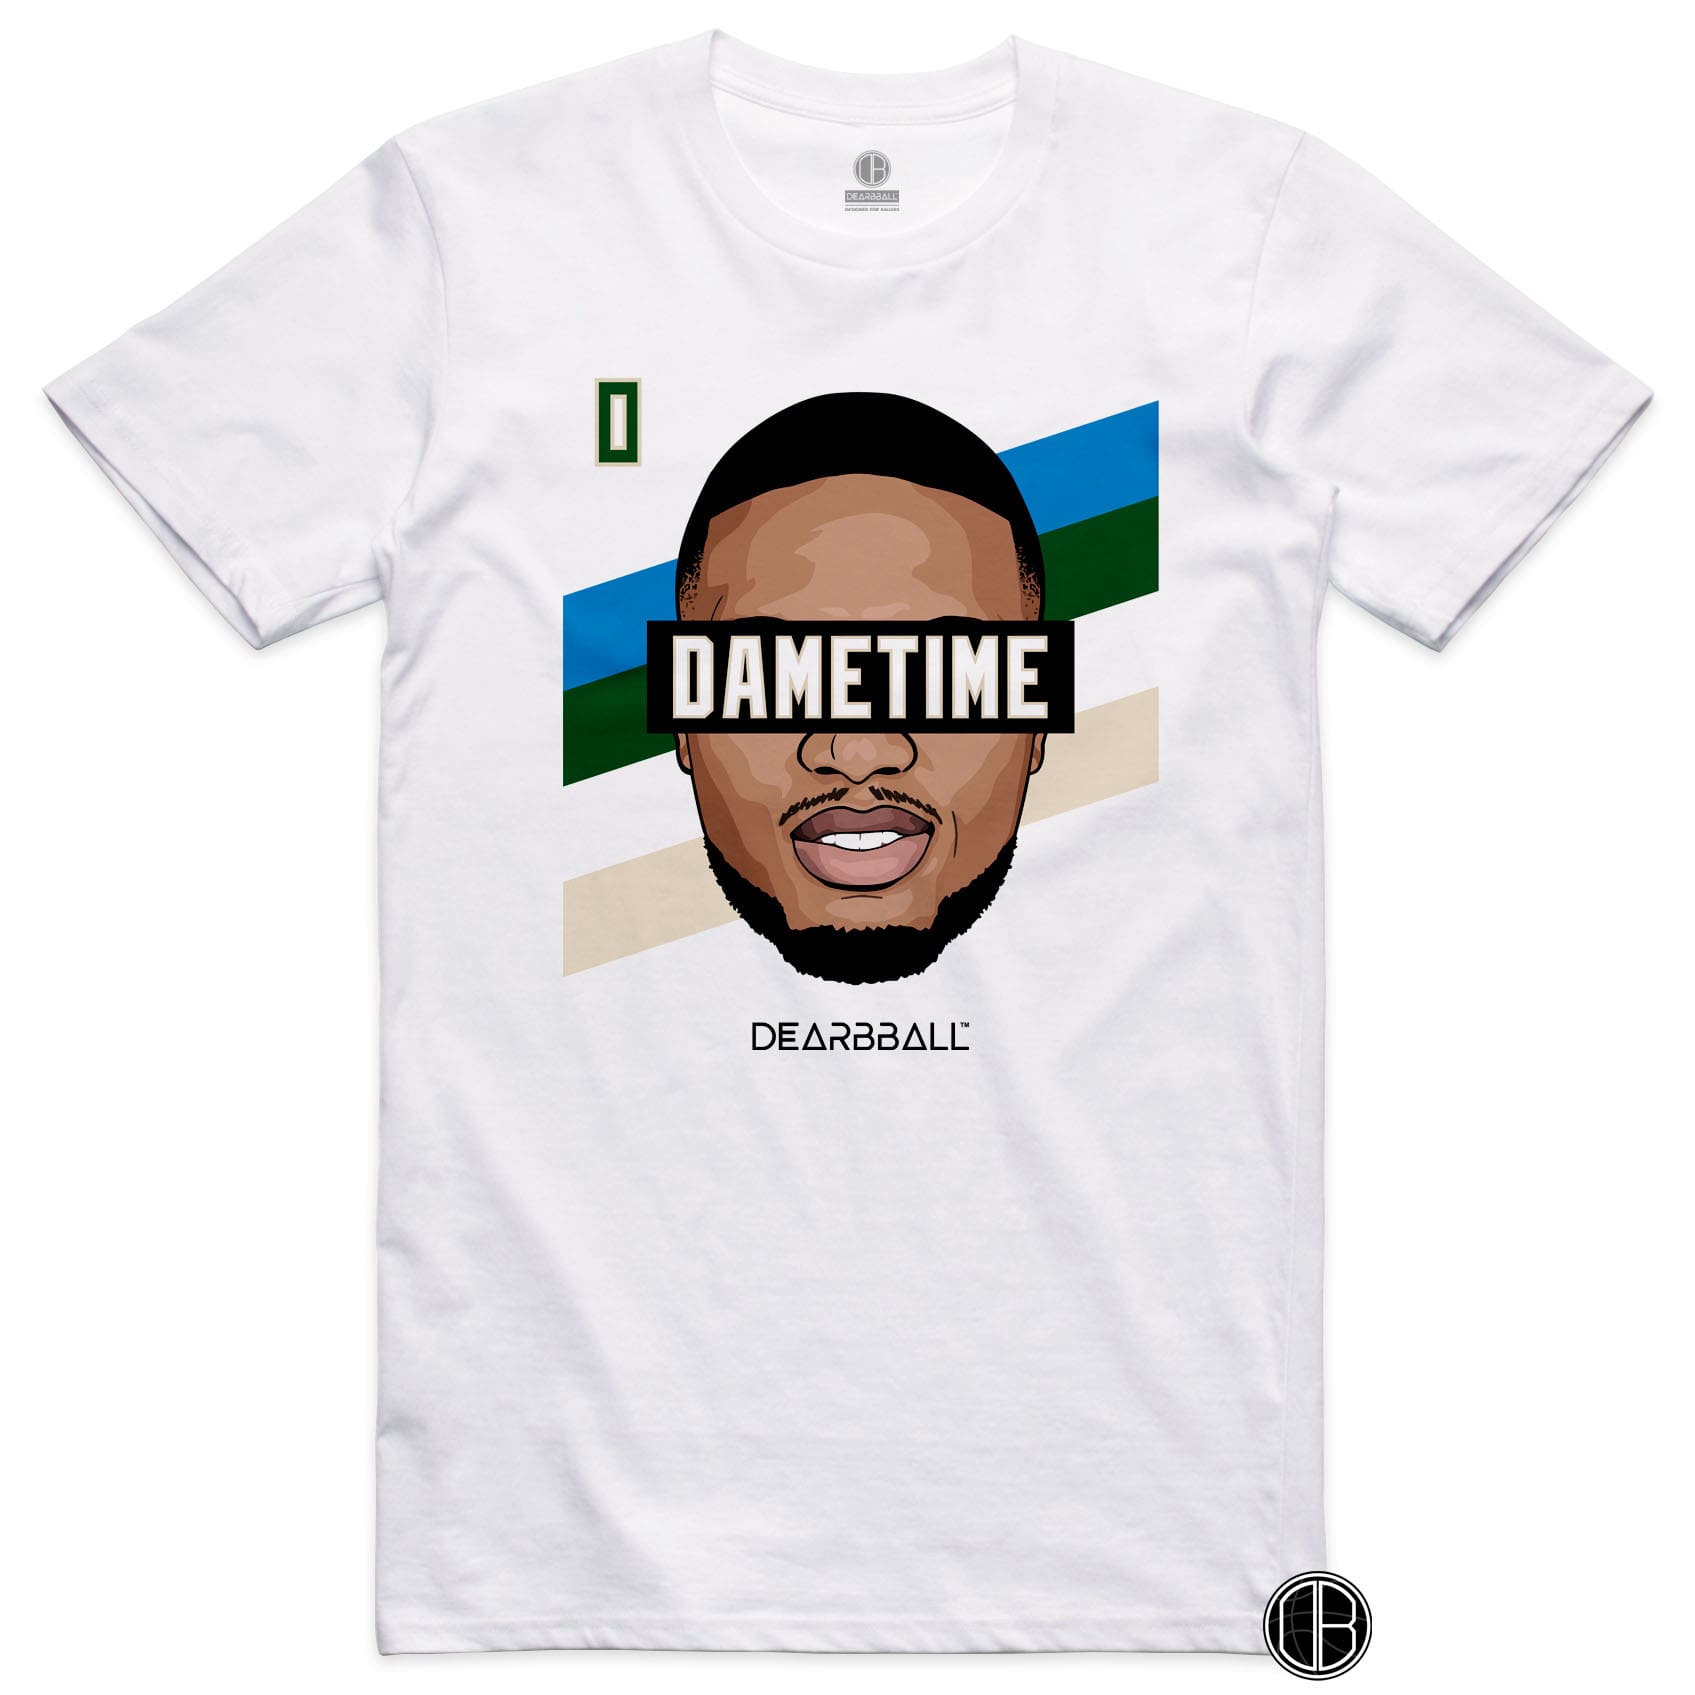 [ENFANT] DearBBall T-Shirt - DameTime Stripes 0 Edition